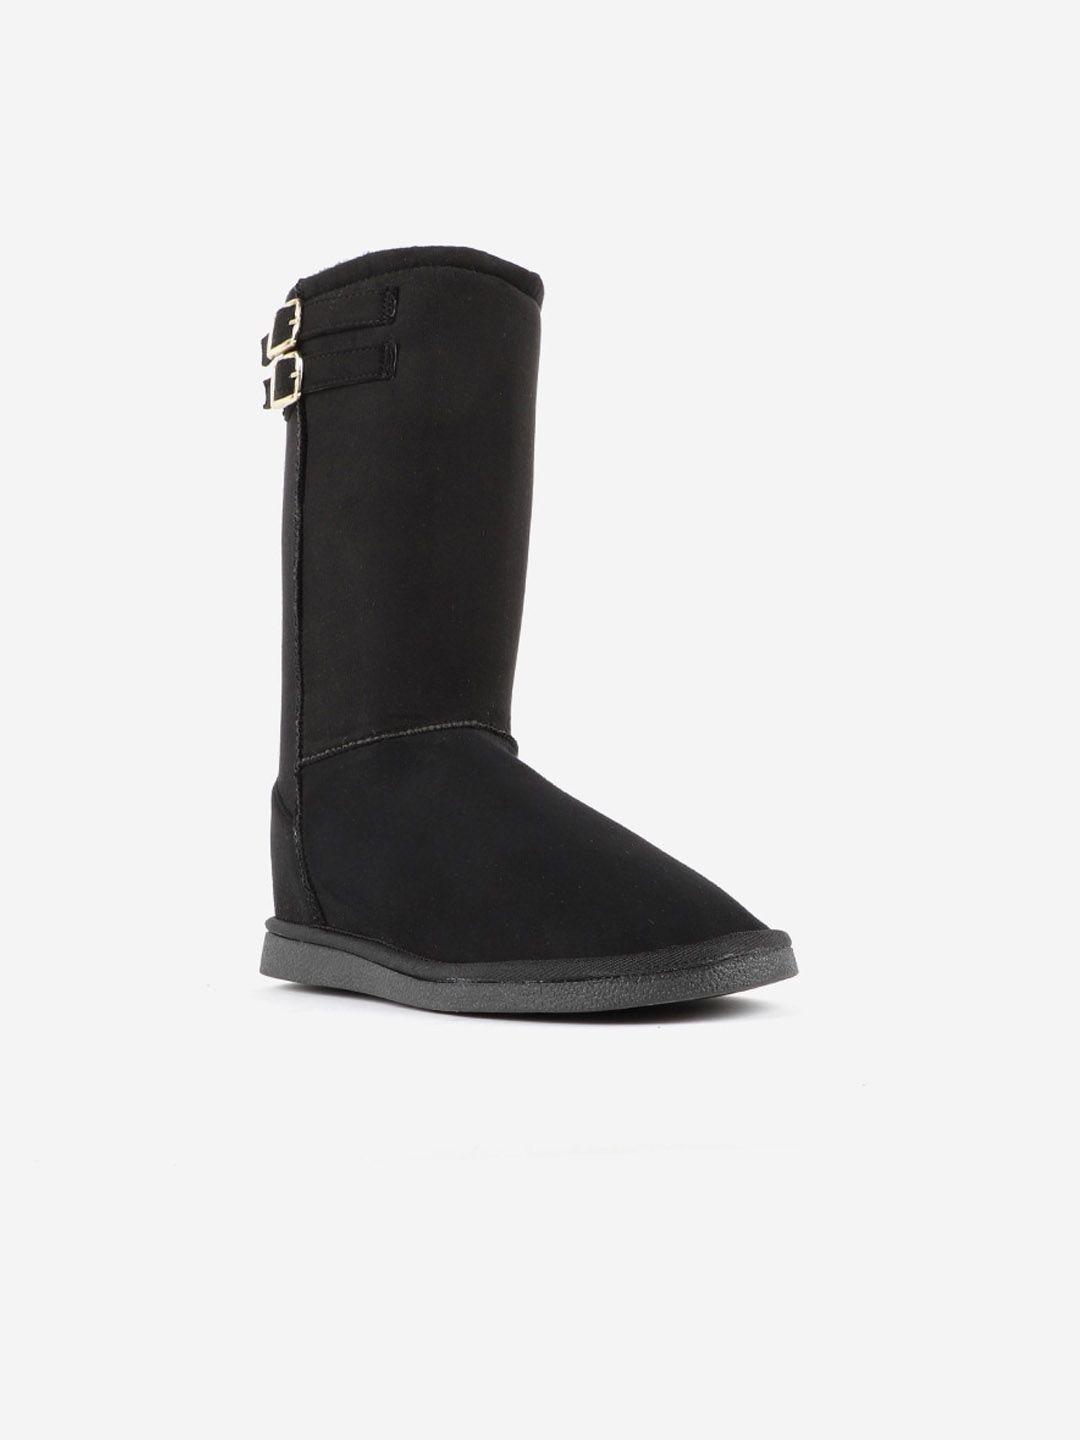 carlton london women black flat boots